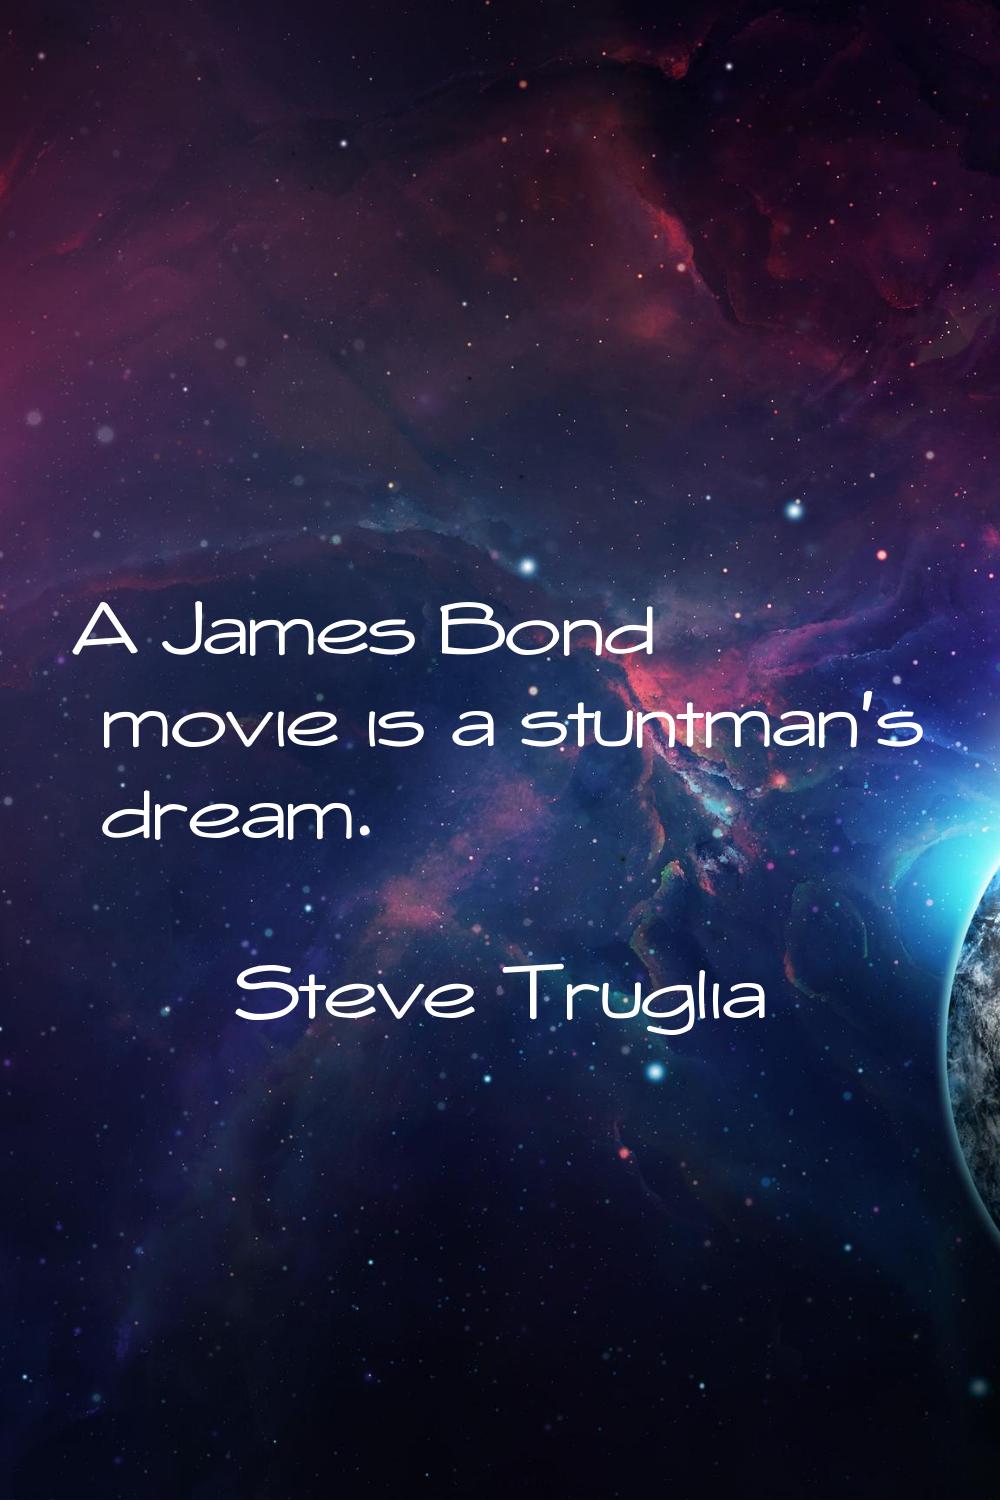 A James Bond movie is a stuntman's dream.